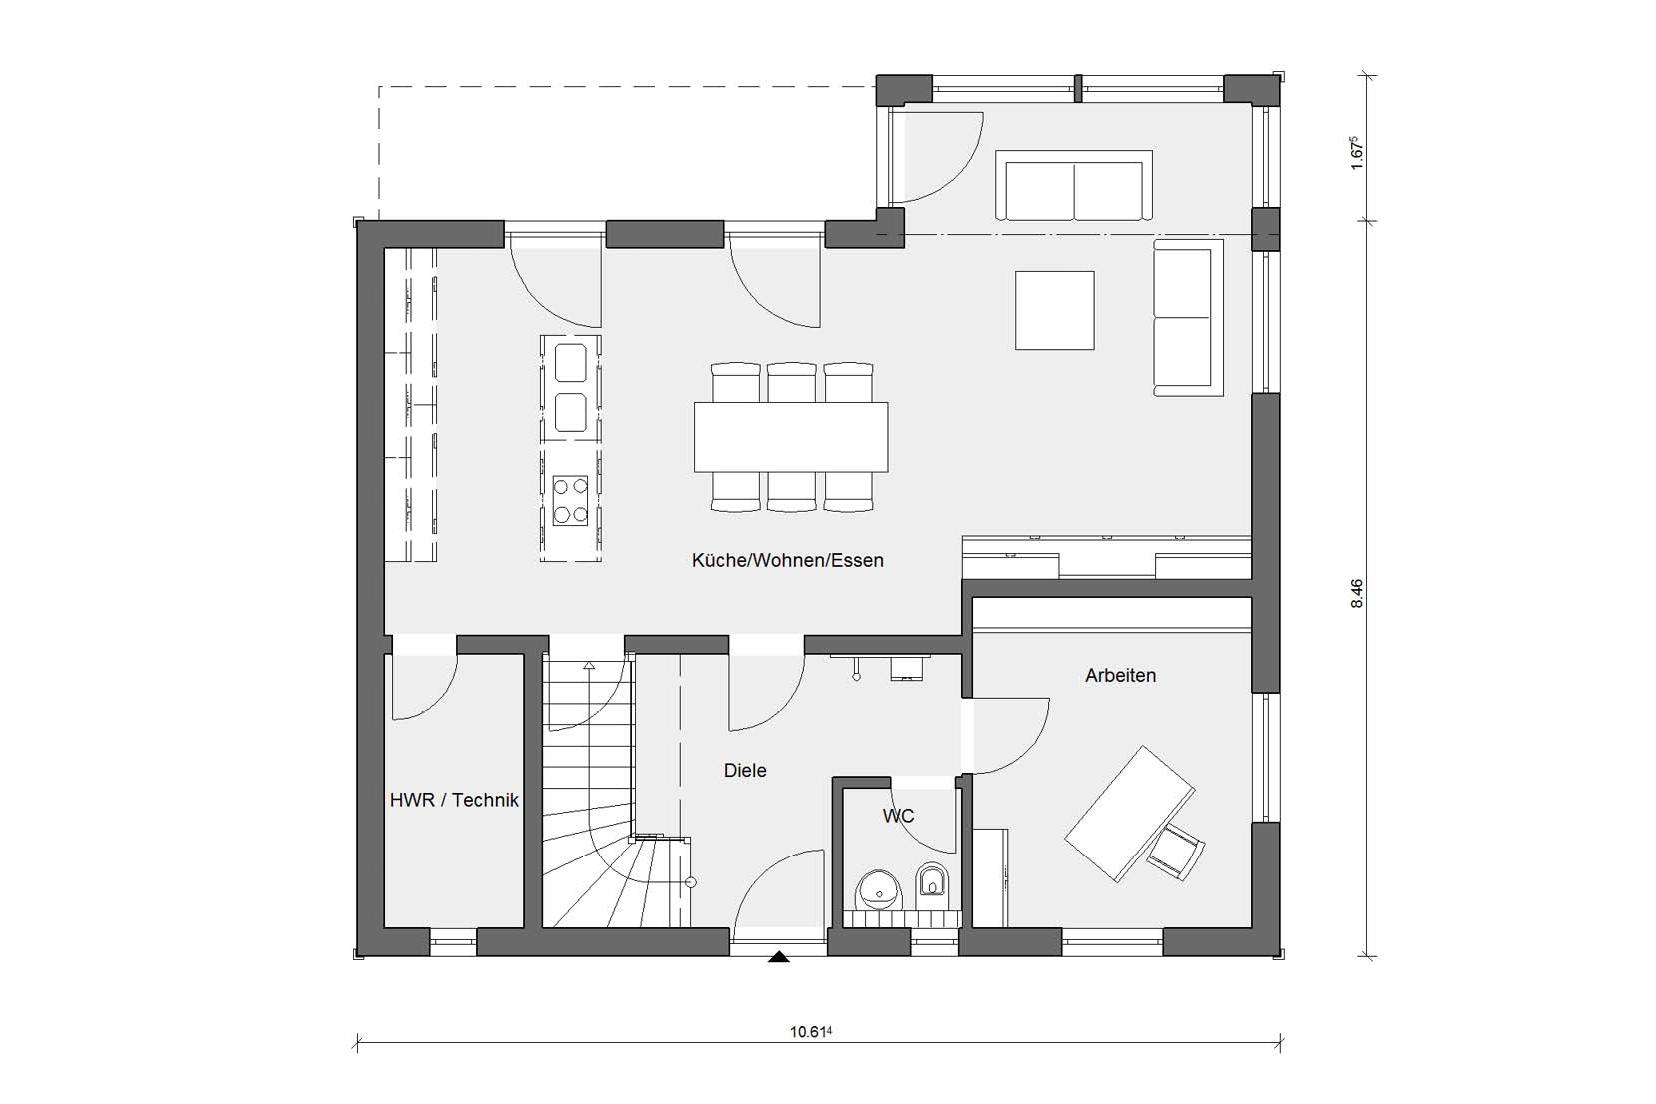 Ground floor floor plan prefabricated house with wooden facade E 20-159.1